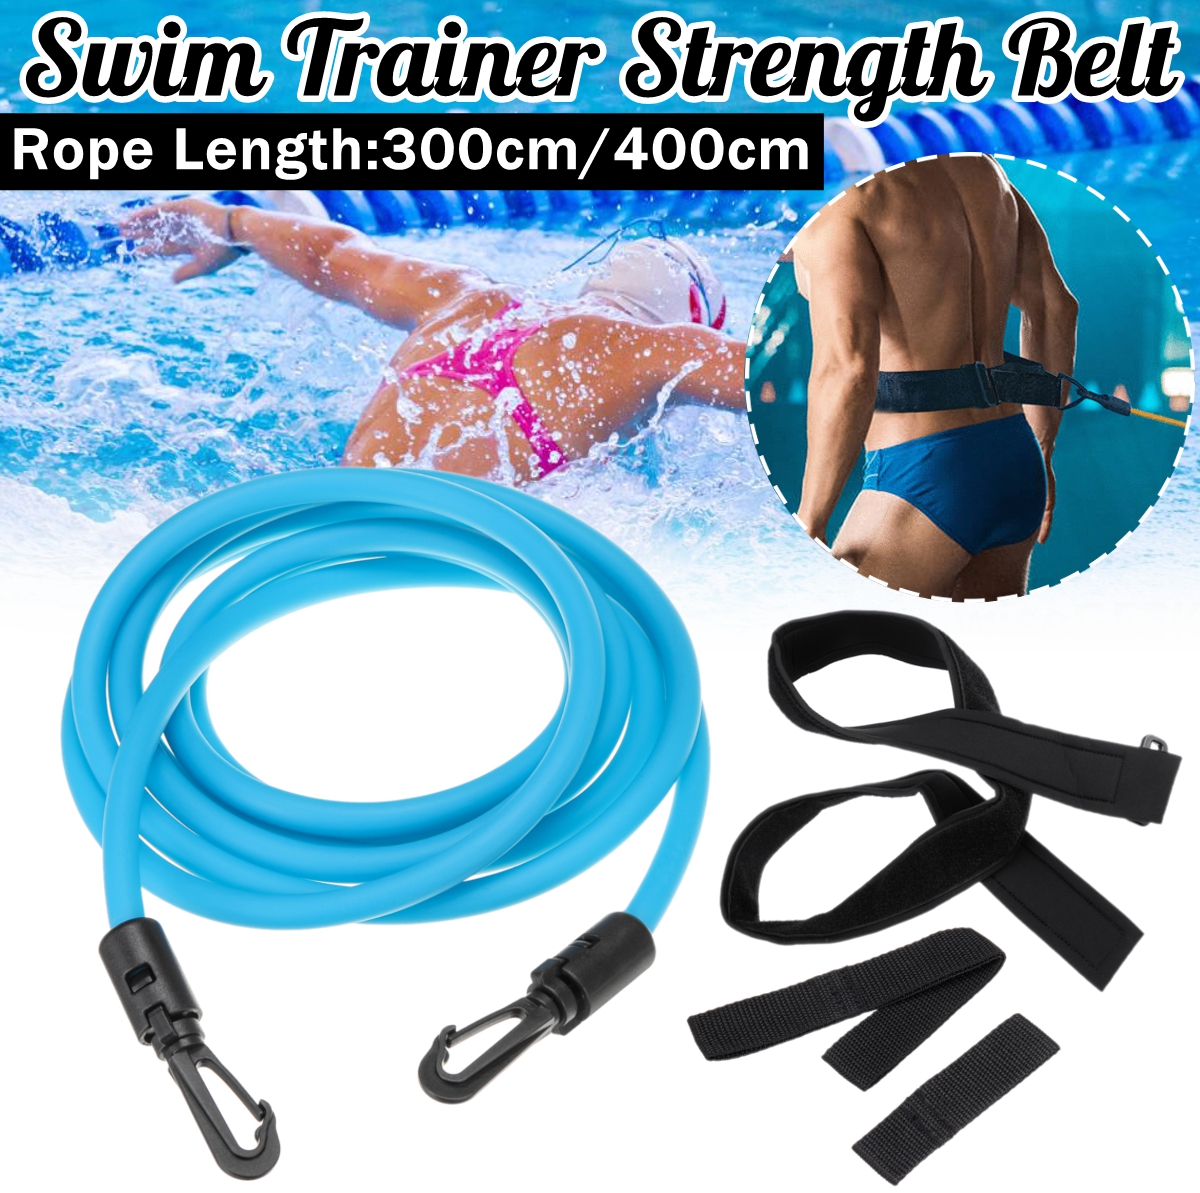 Swim-Water-Training-Rope-Strength-Belt-Harness-Resistance-Leash-Kit-Exerciser-For-Adults-Children-1709294-1